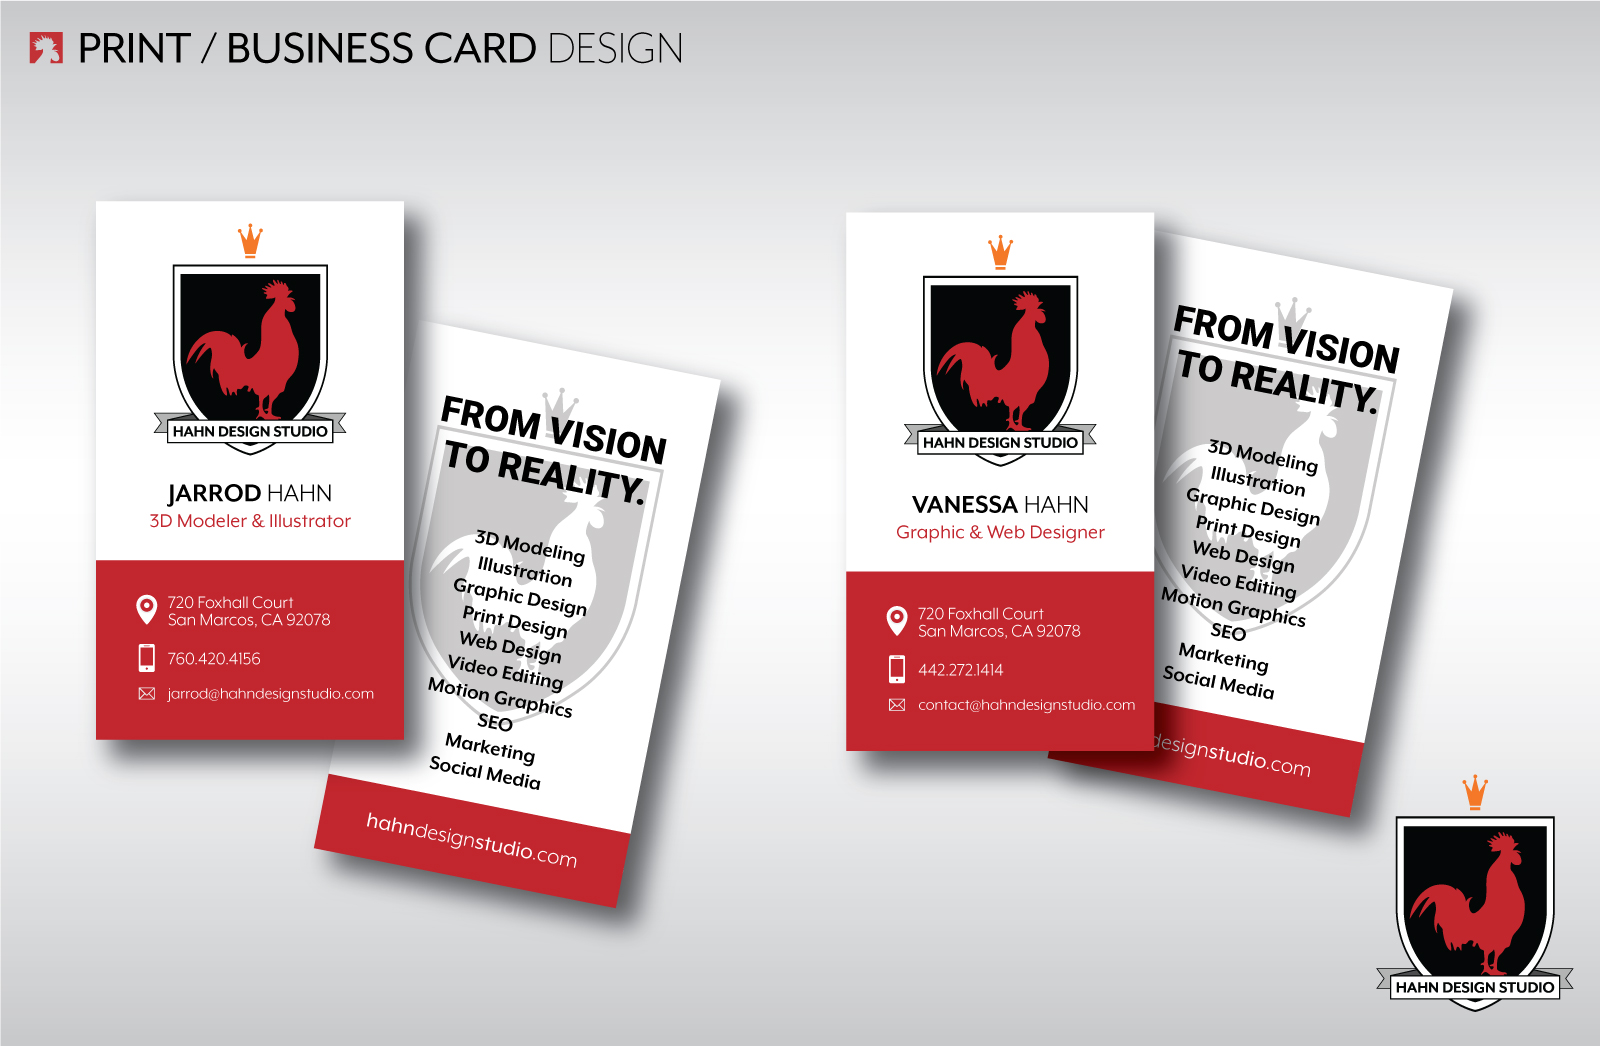 Print Design, Branding, and Business Card Design for Hahn Design Studio